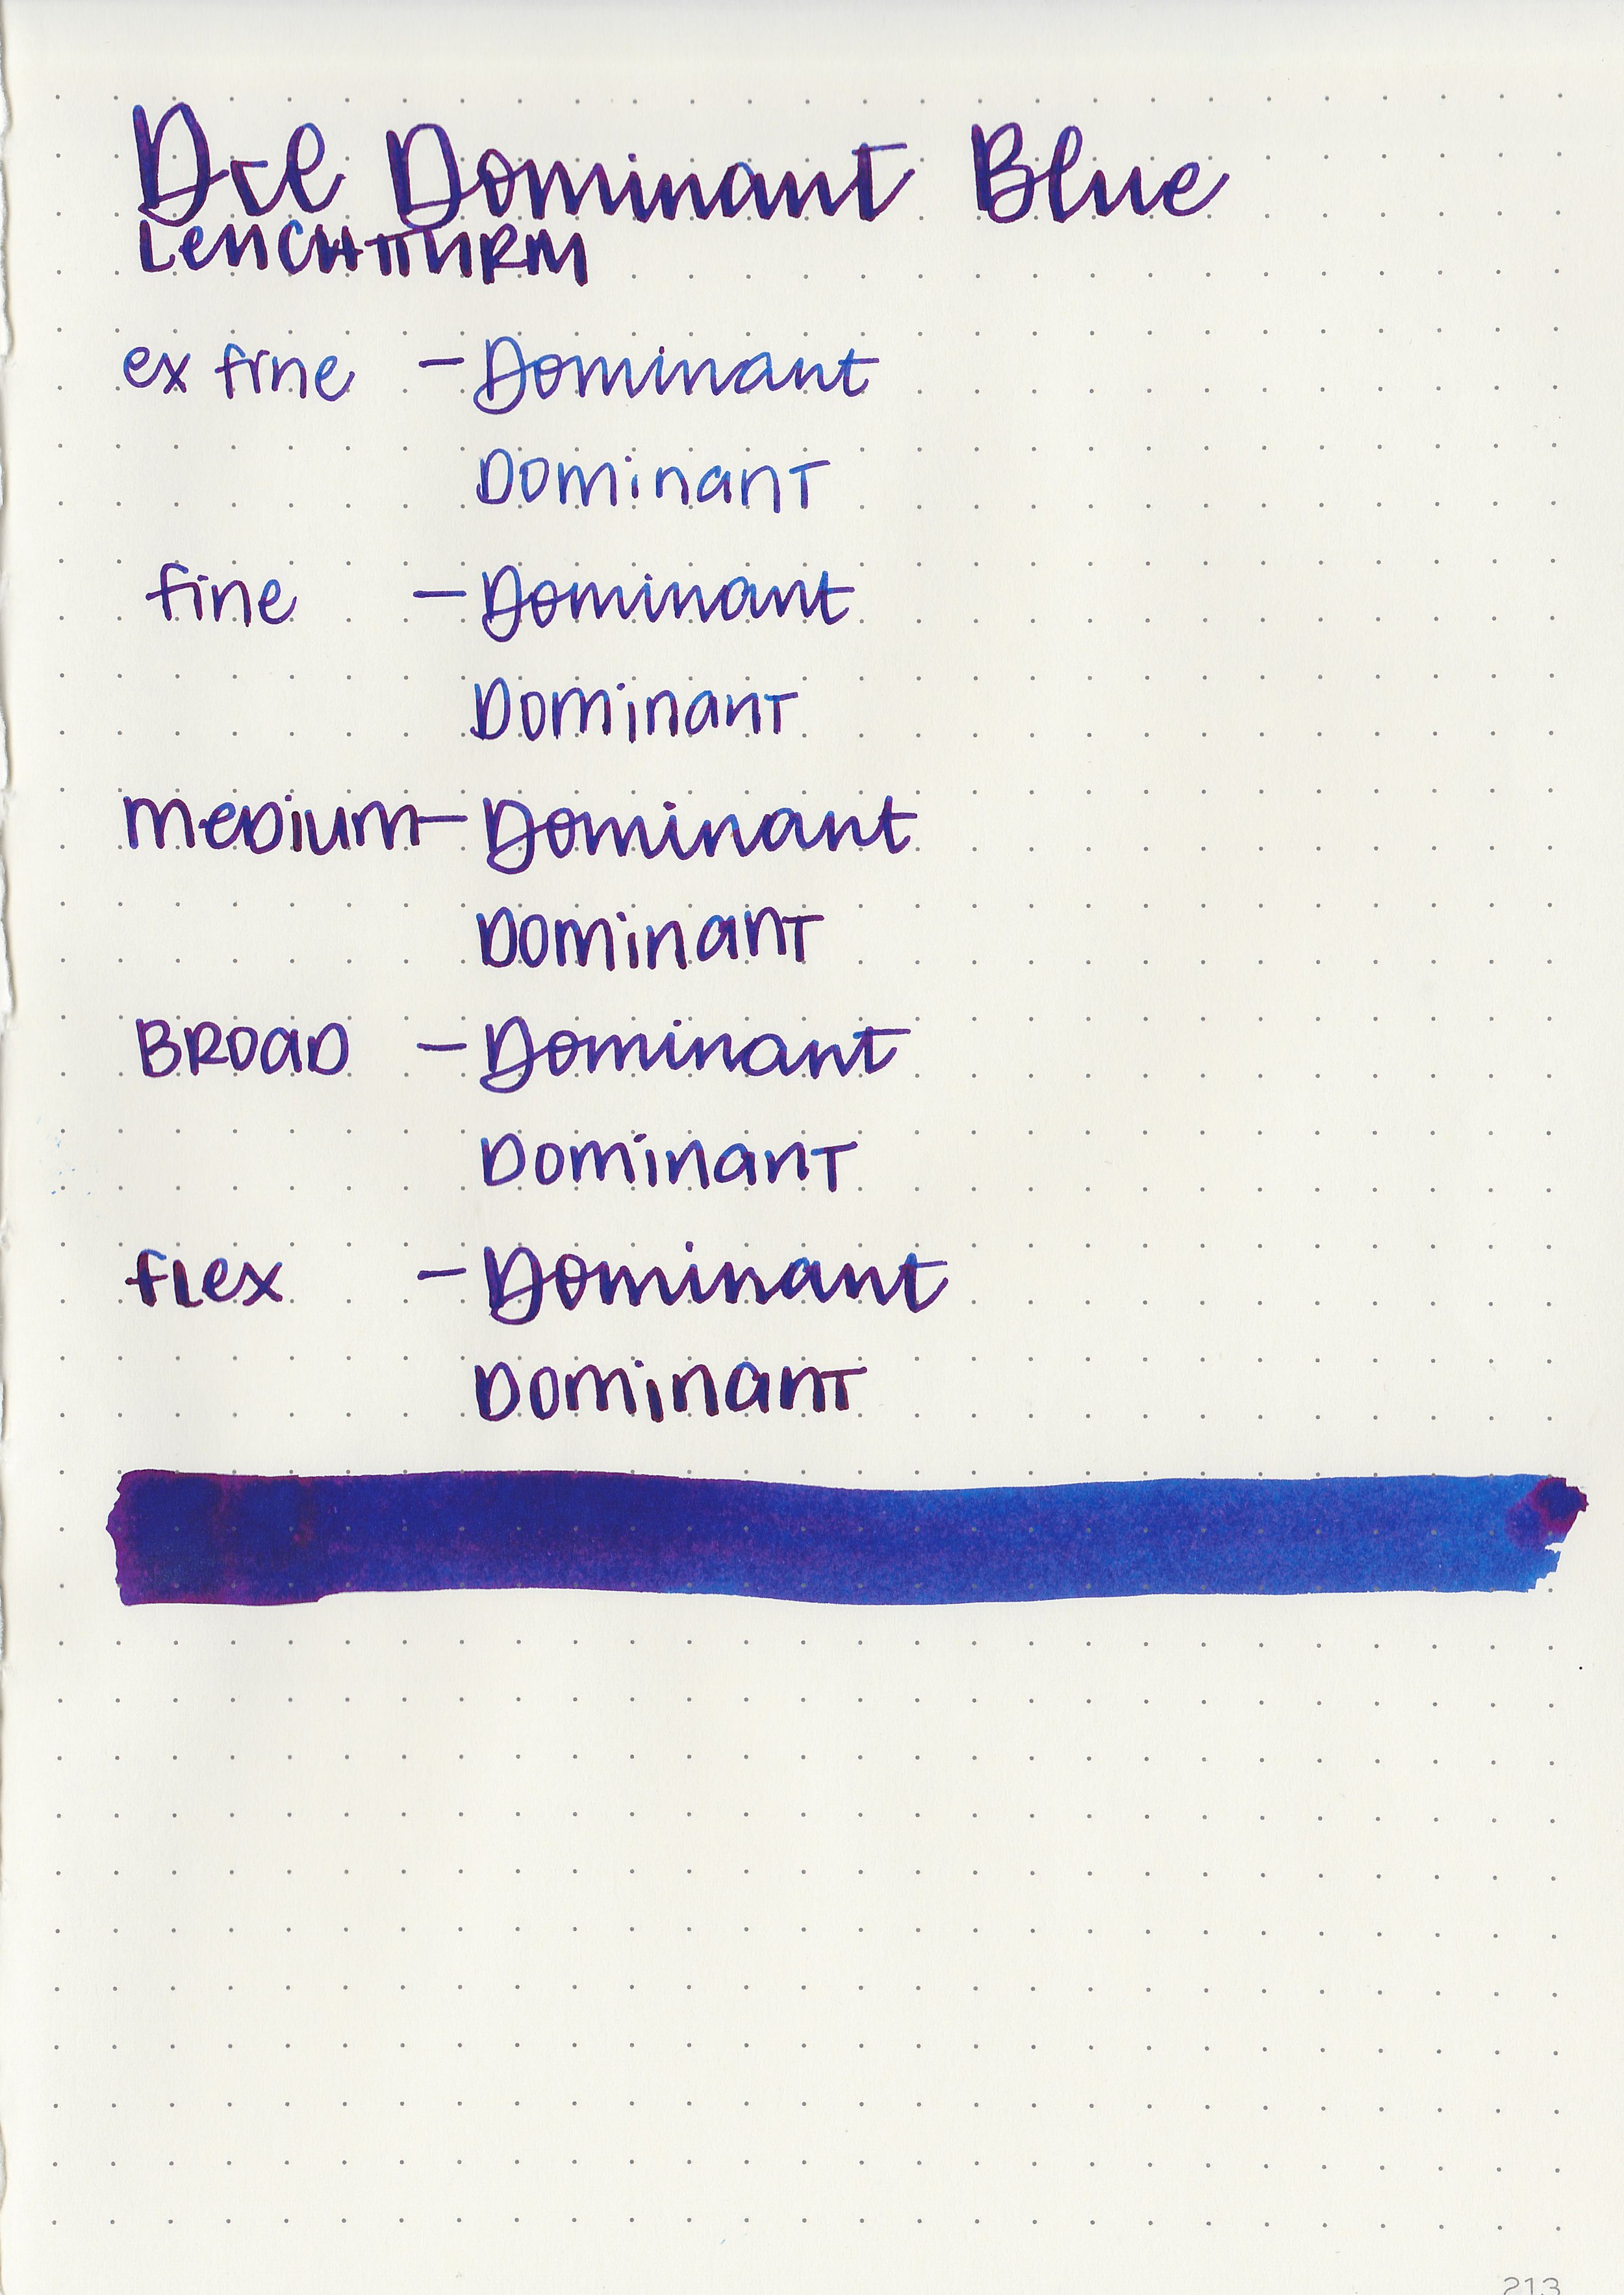 di-dominant-blue-9.jpg